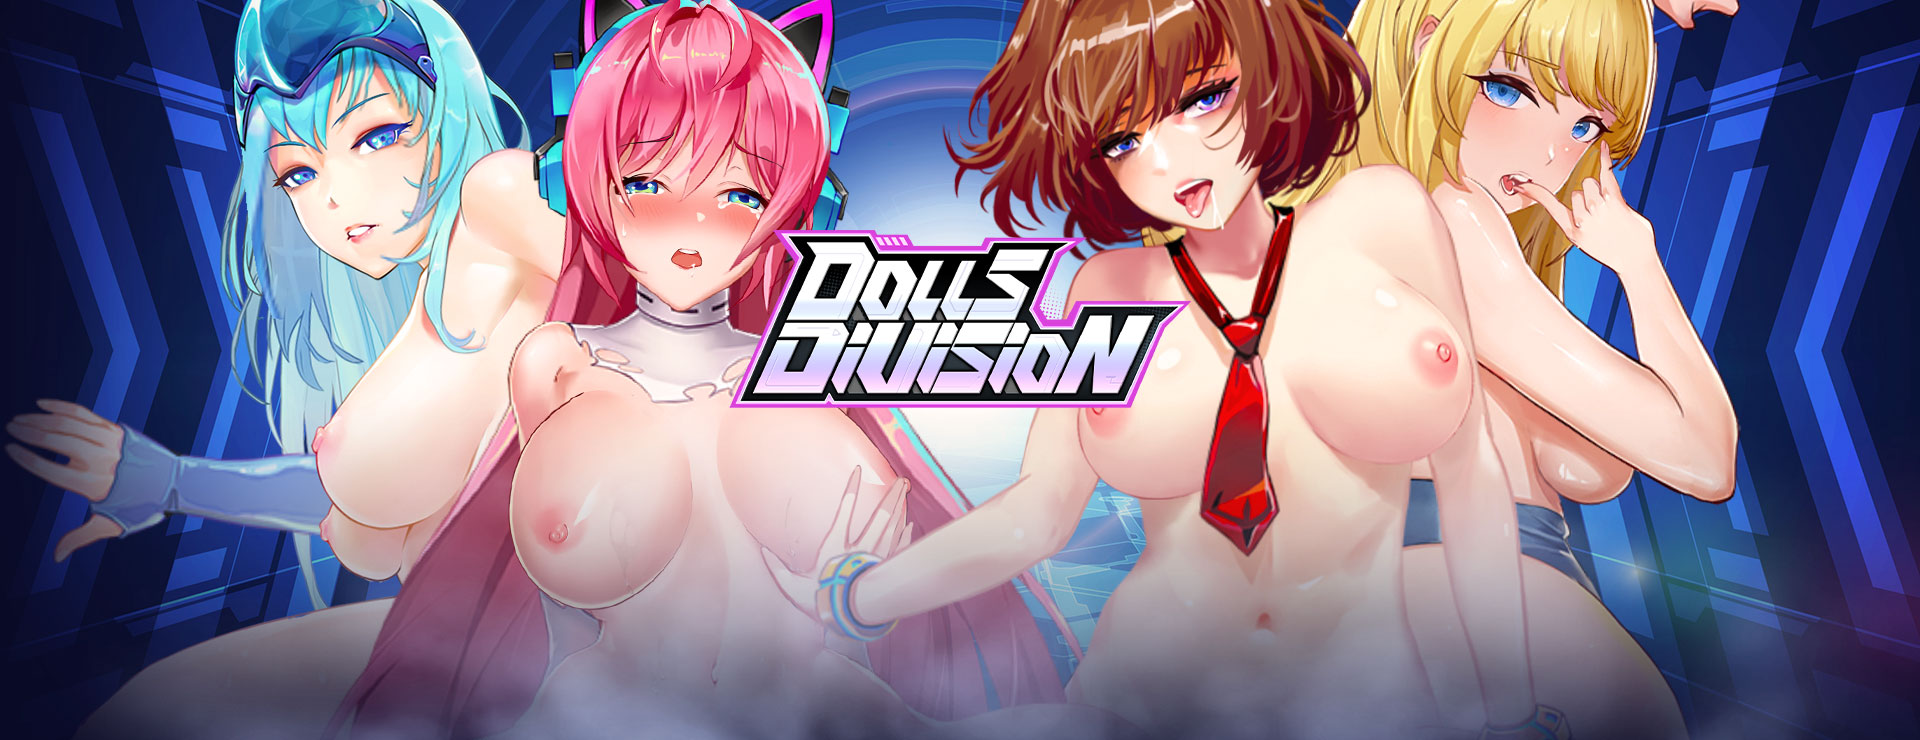 Dolls Division - Action Adventure Game